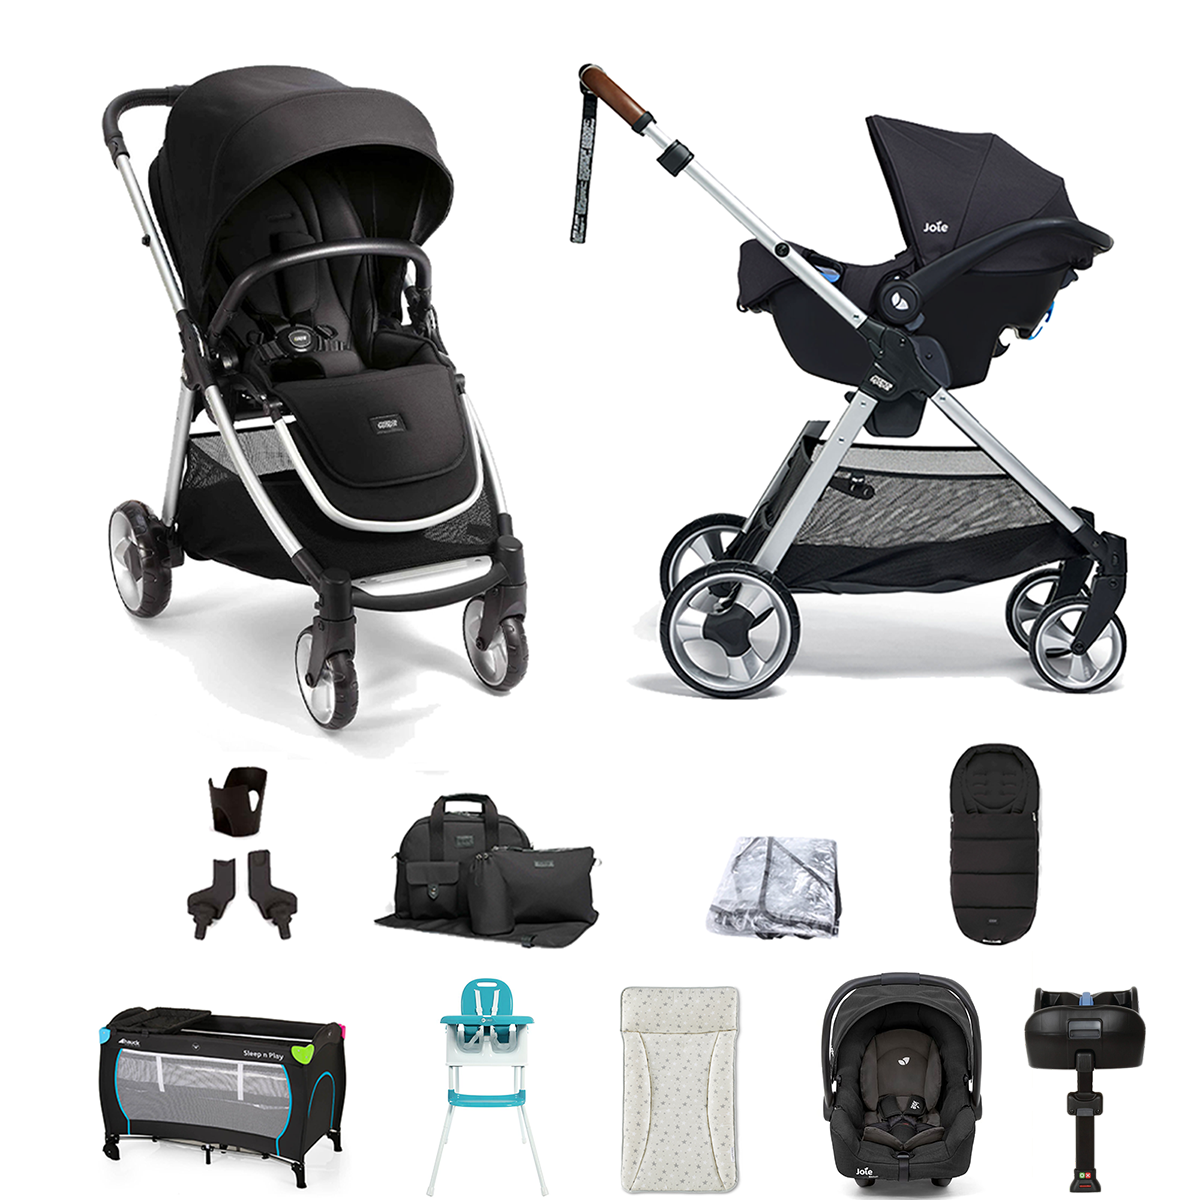 Mamas & Papas Flip XT2 11pc Essentials (Gemm Car Seat) Everything You Need Travel System Bundle with ISOFIX Base - Black